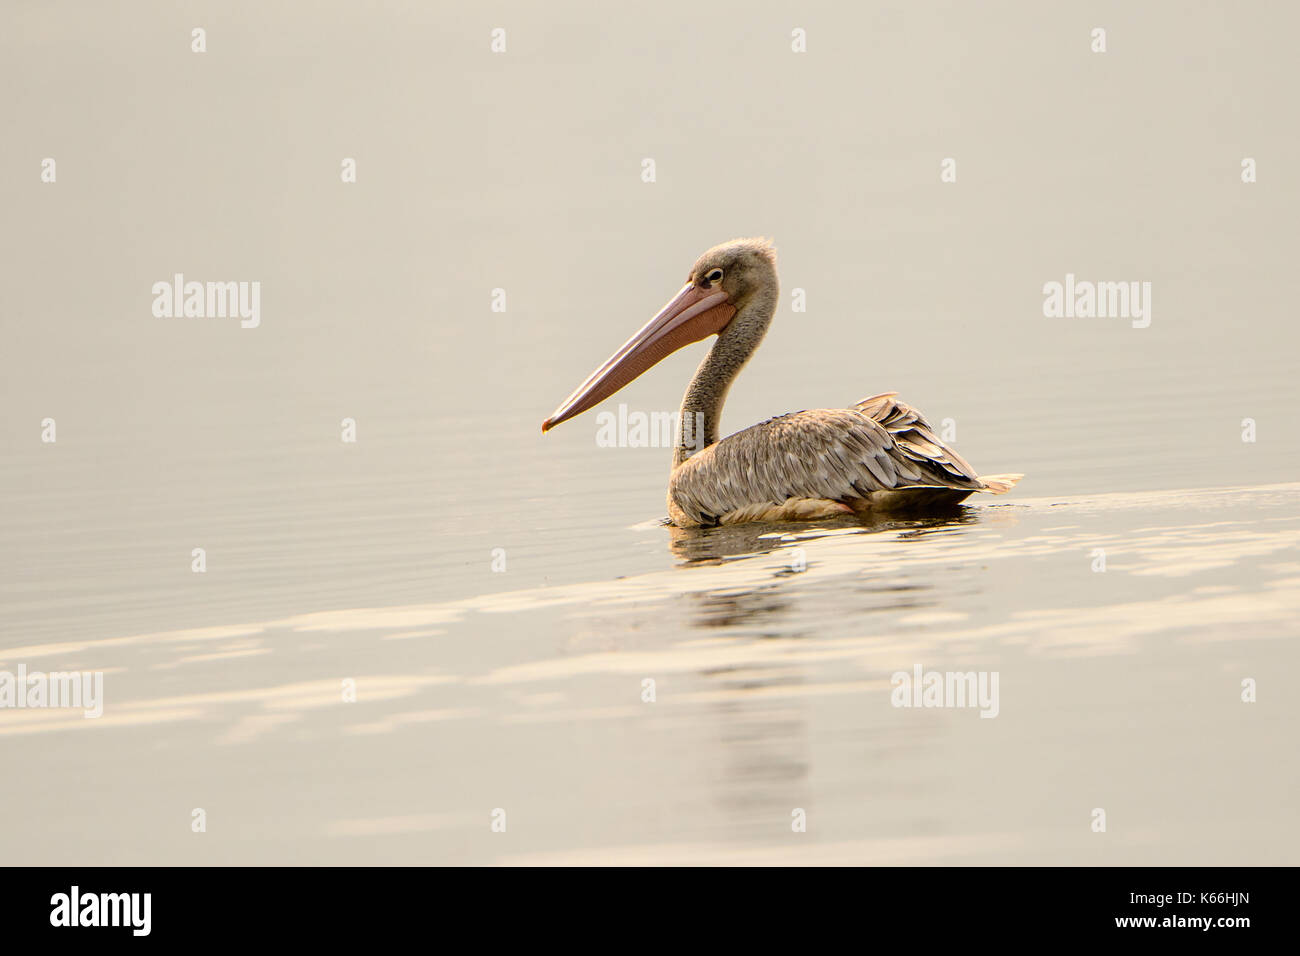 Rosa backed pelican nuoto Foto Stock